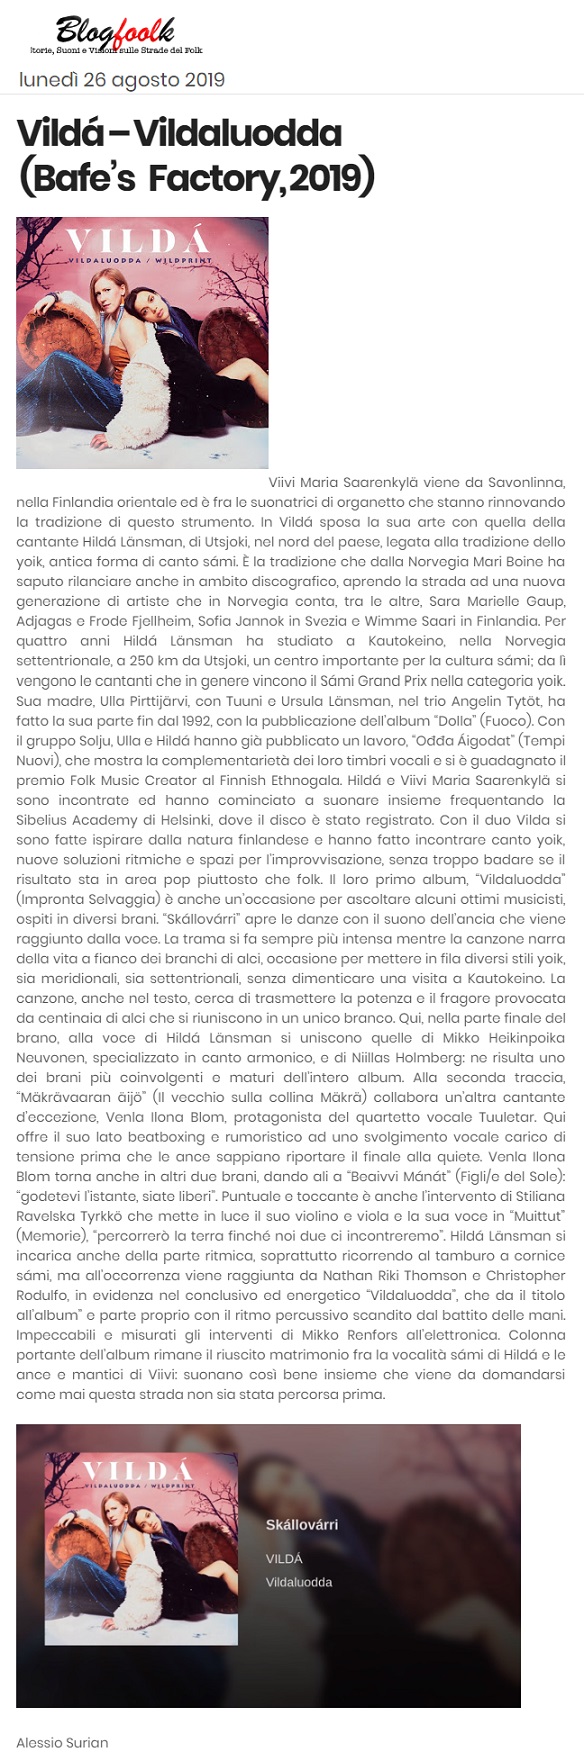 Blogfoolk (Italy), 26.8.2019